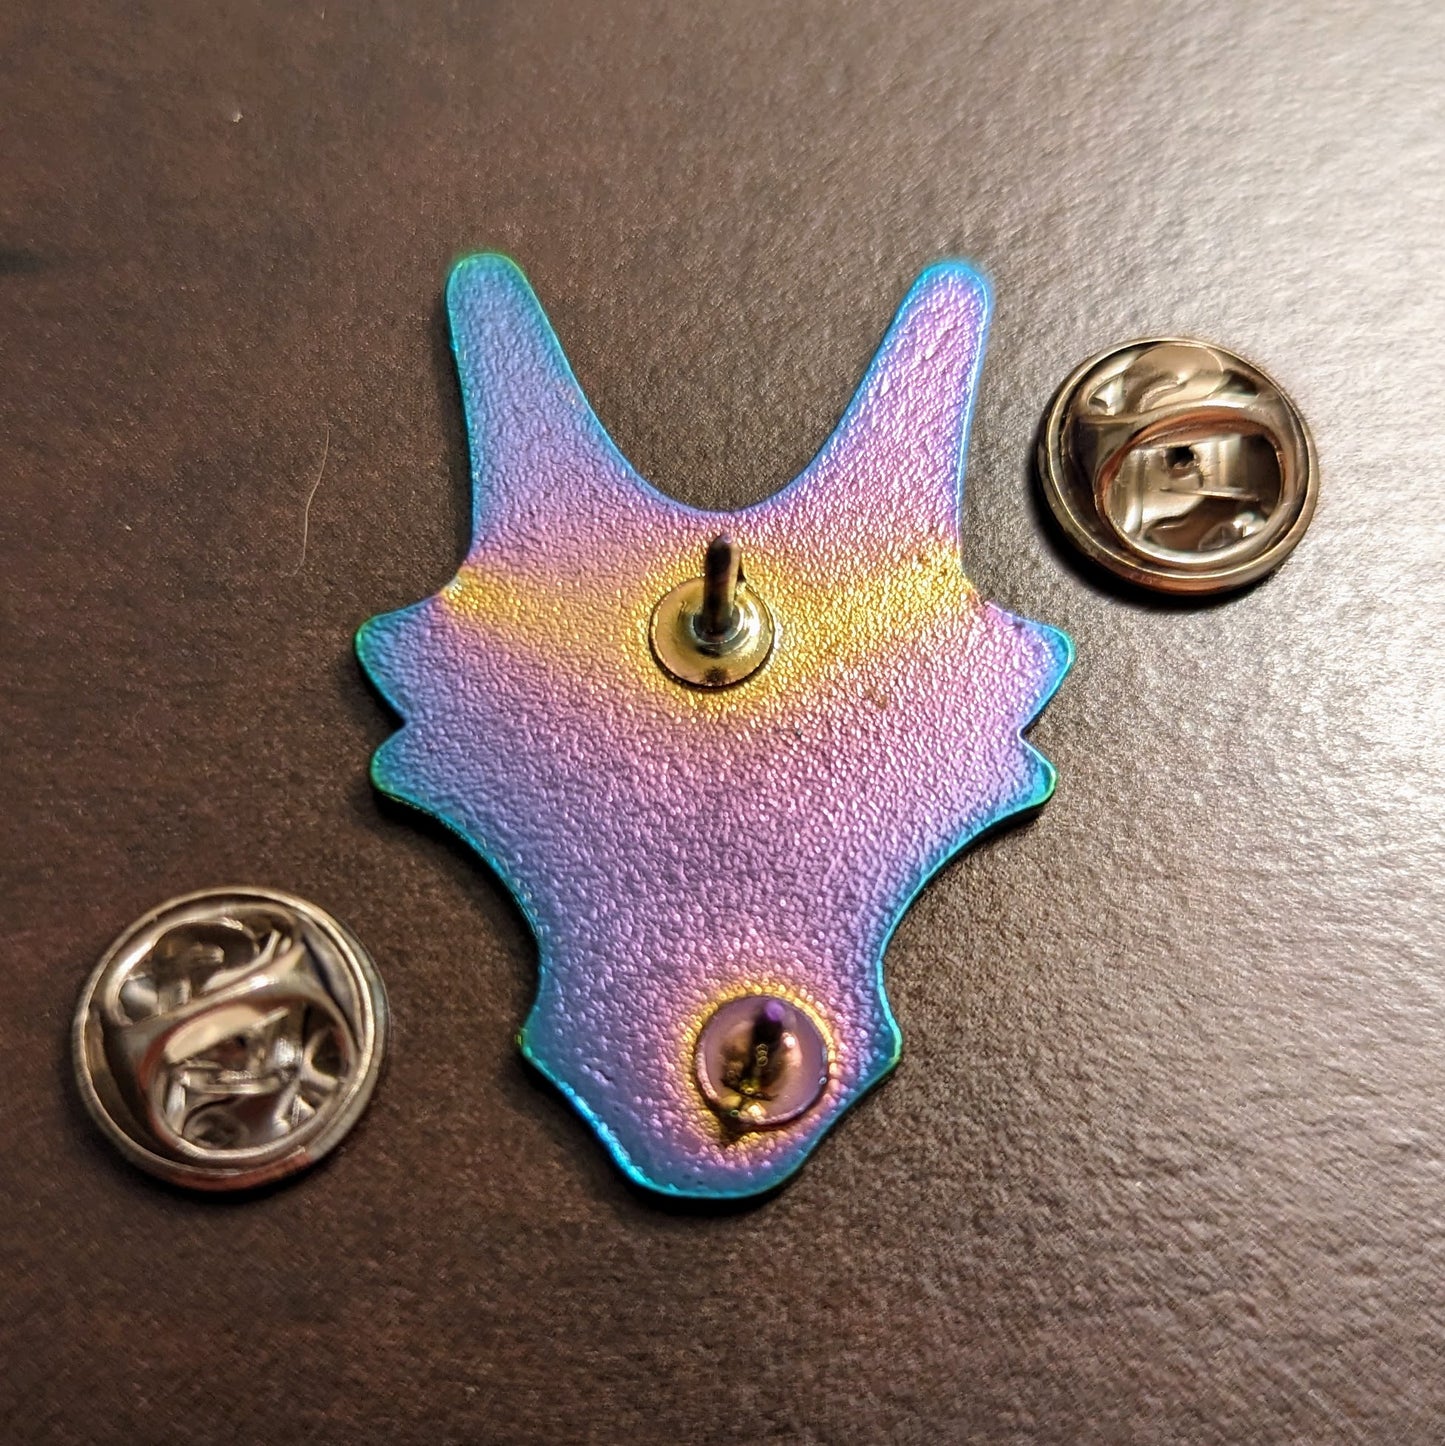 dragon woodshop logo pin in rainbow metal and soft white enamel fill